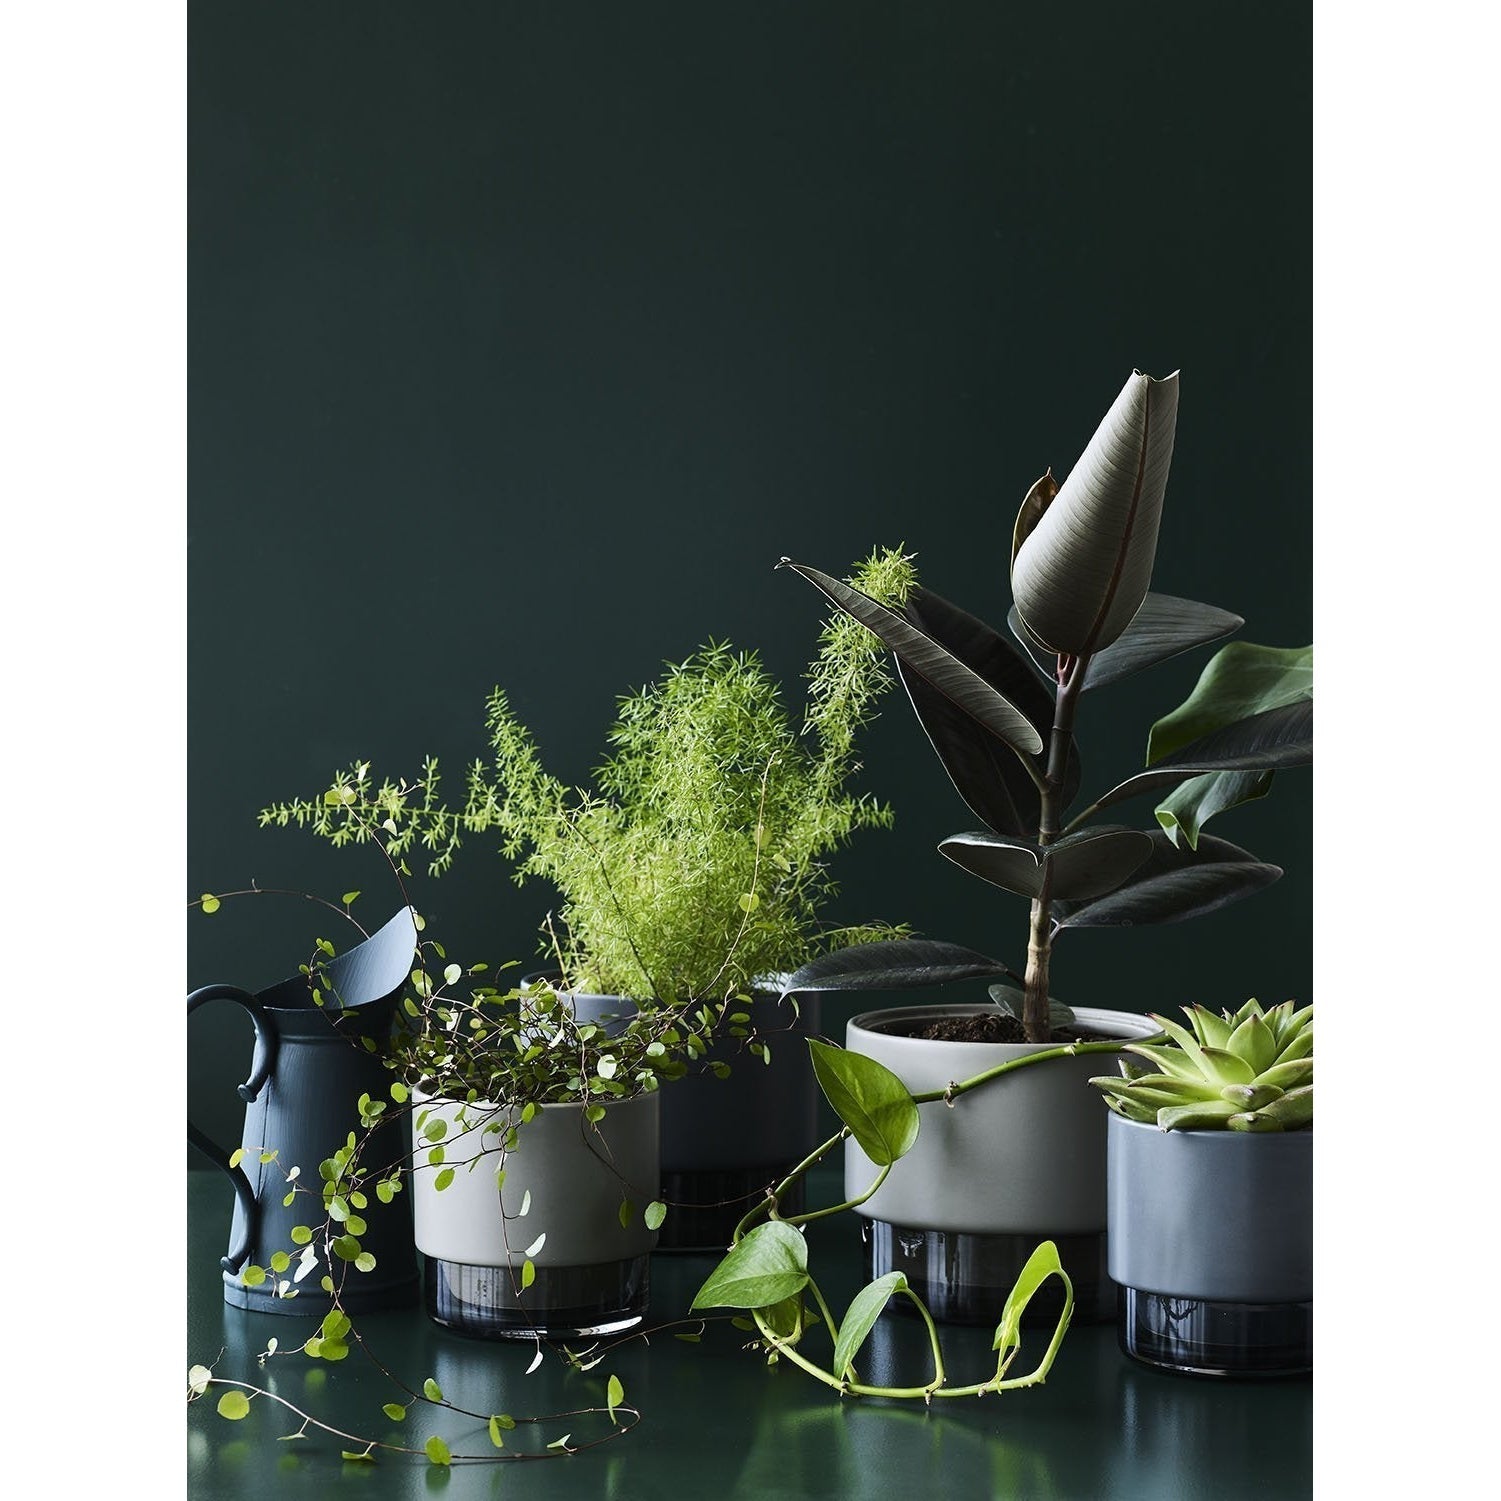 Lucie Kaas Gro Plant Holder Green, 15 cm